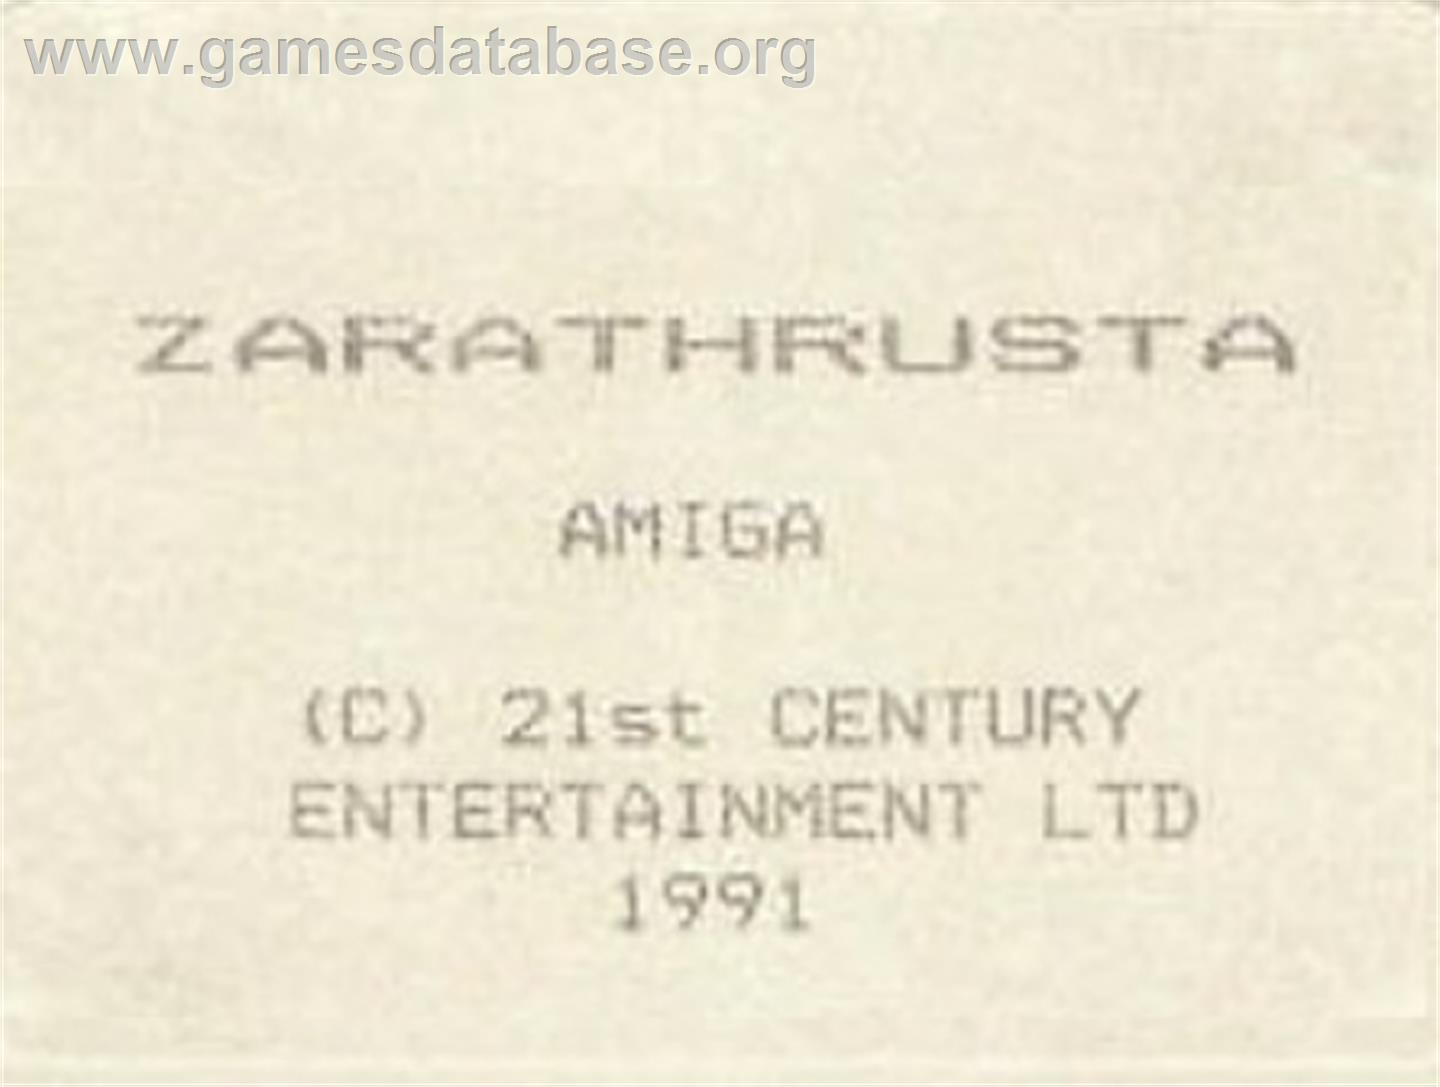 Zarathrusta - Commodore Amiga - Artwork - Cartridge Top